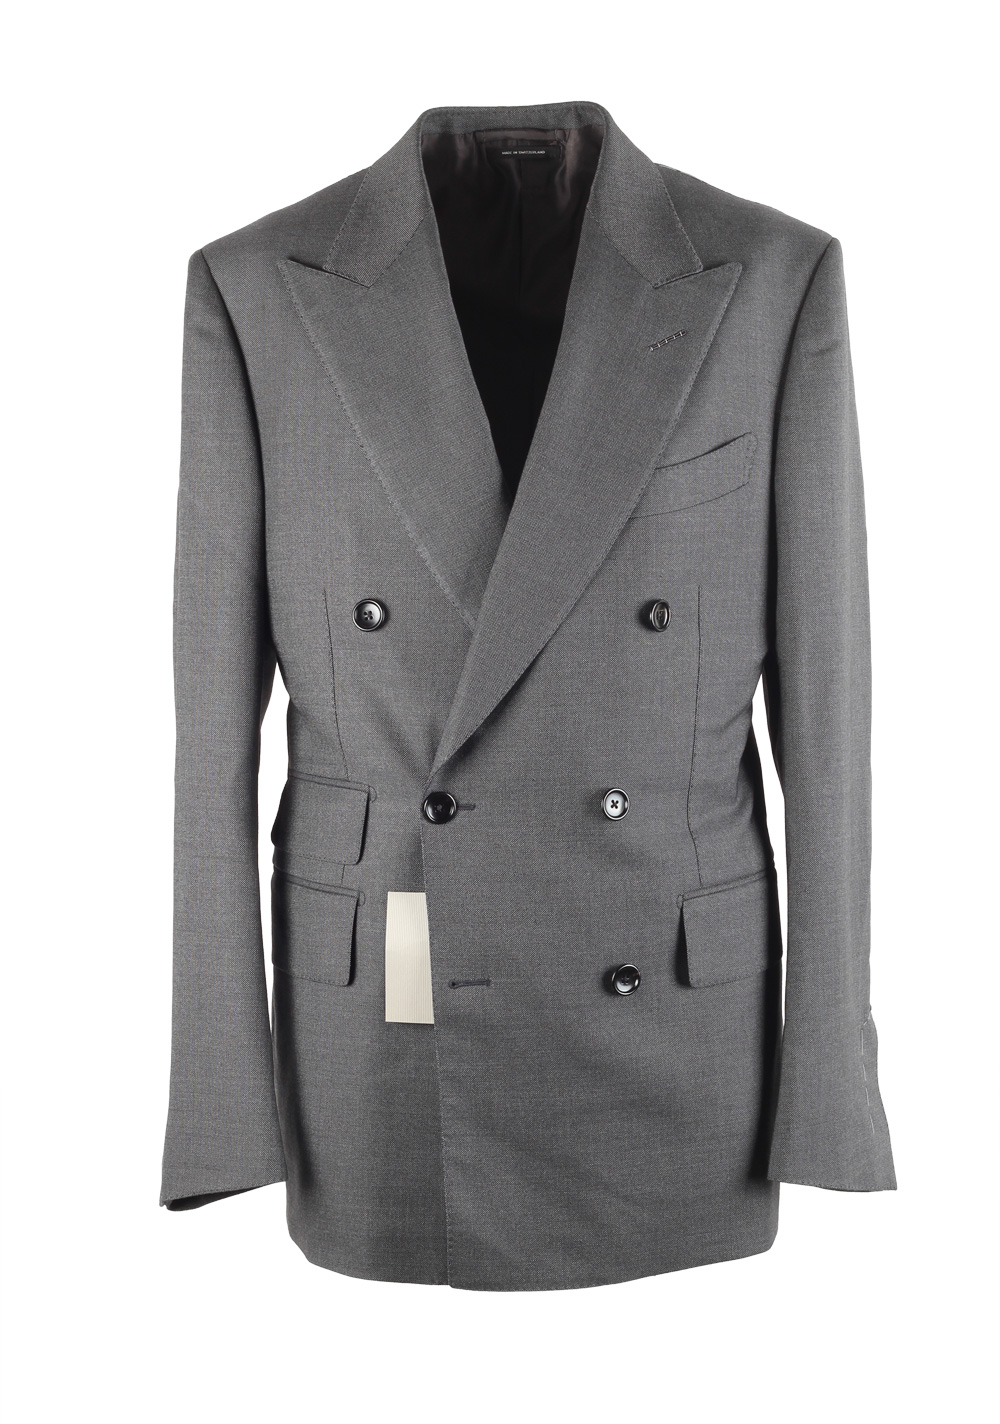 Top 80+ imagen grey suit tom ford - Abzlocal.mx